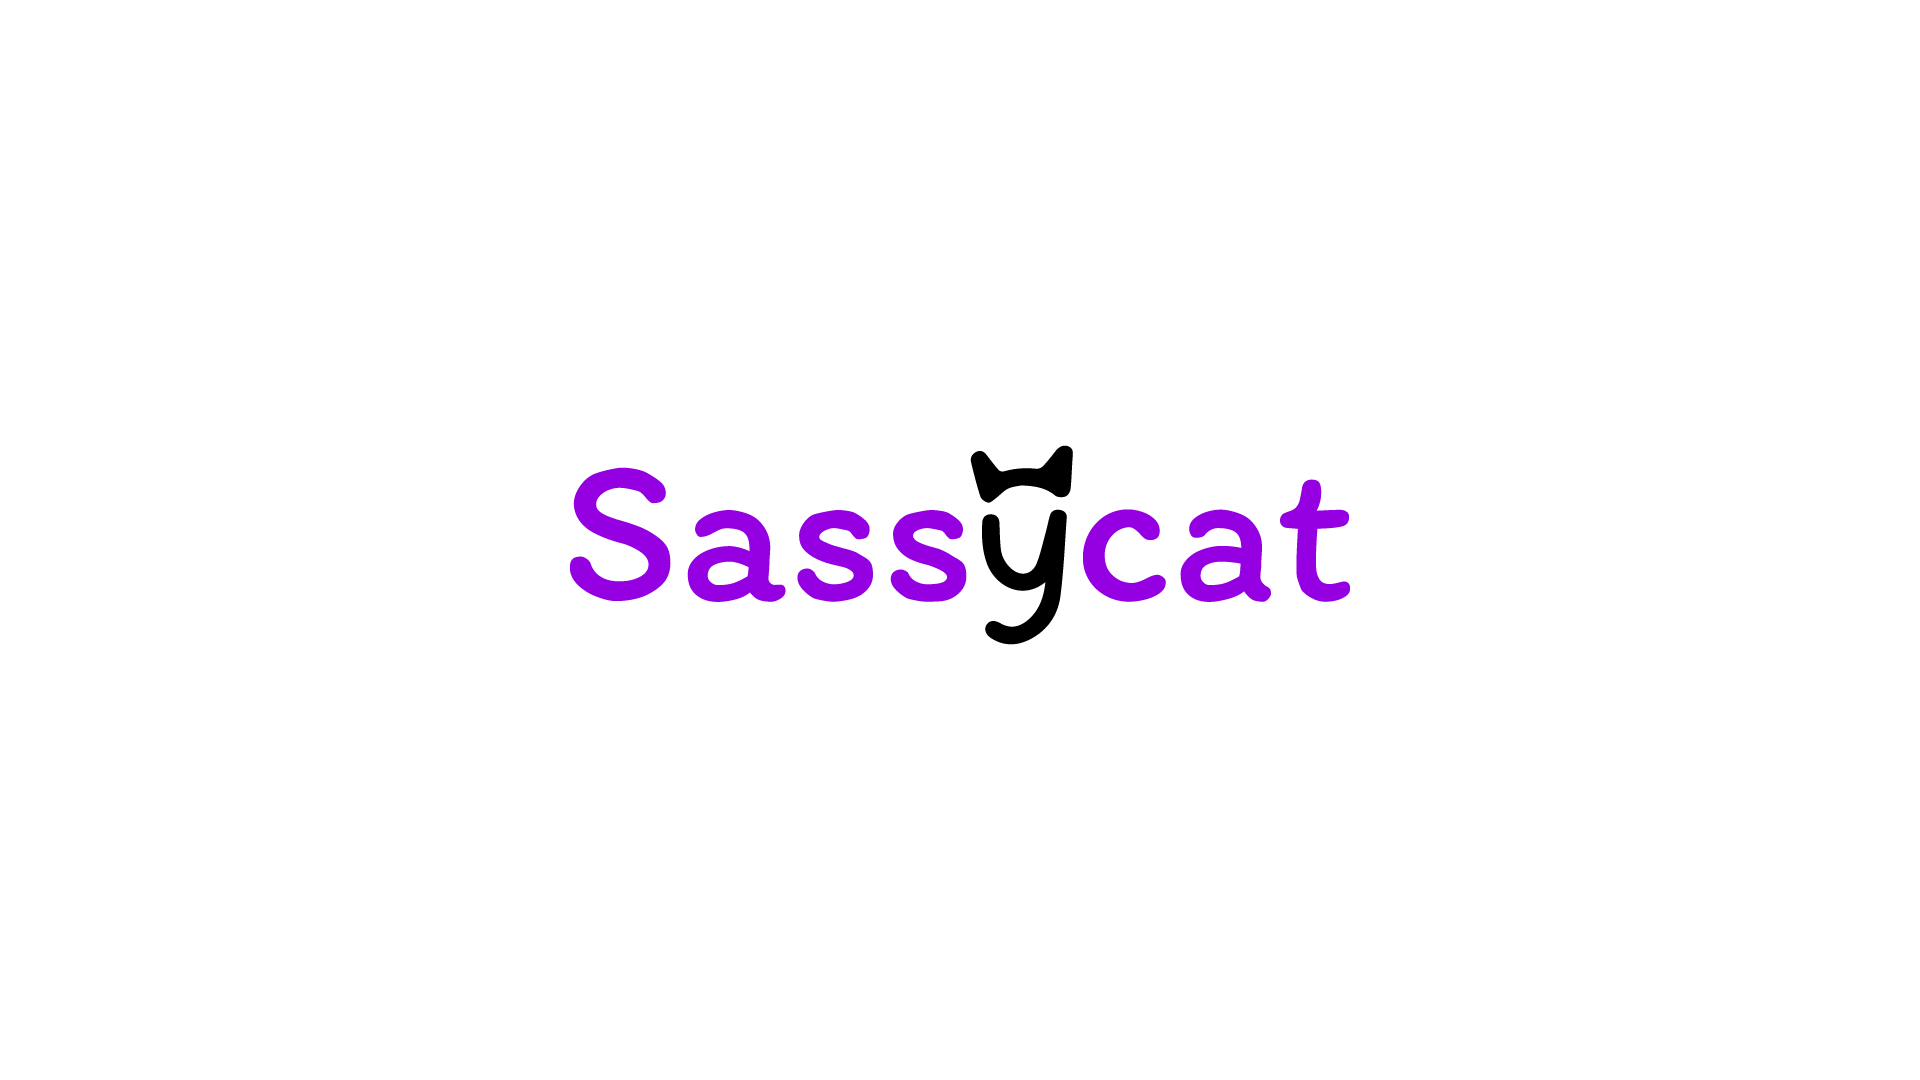 Sassycat